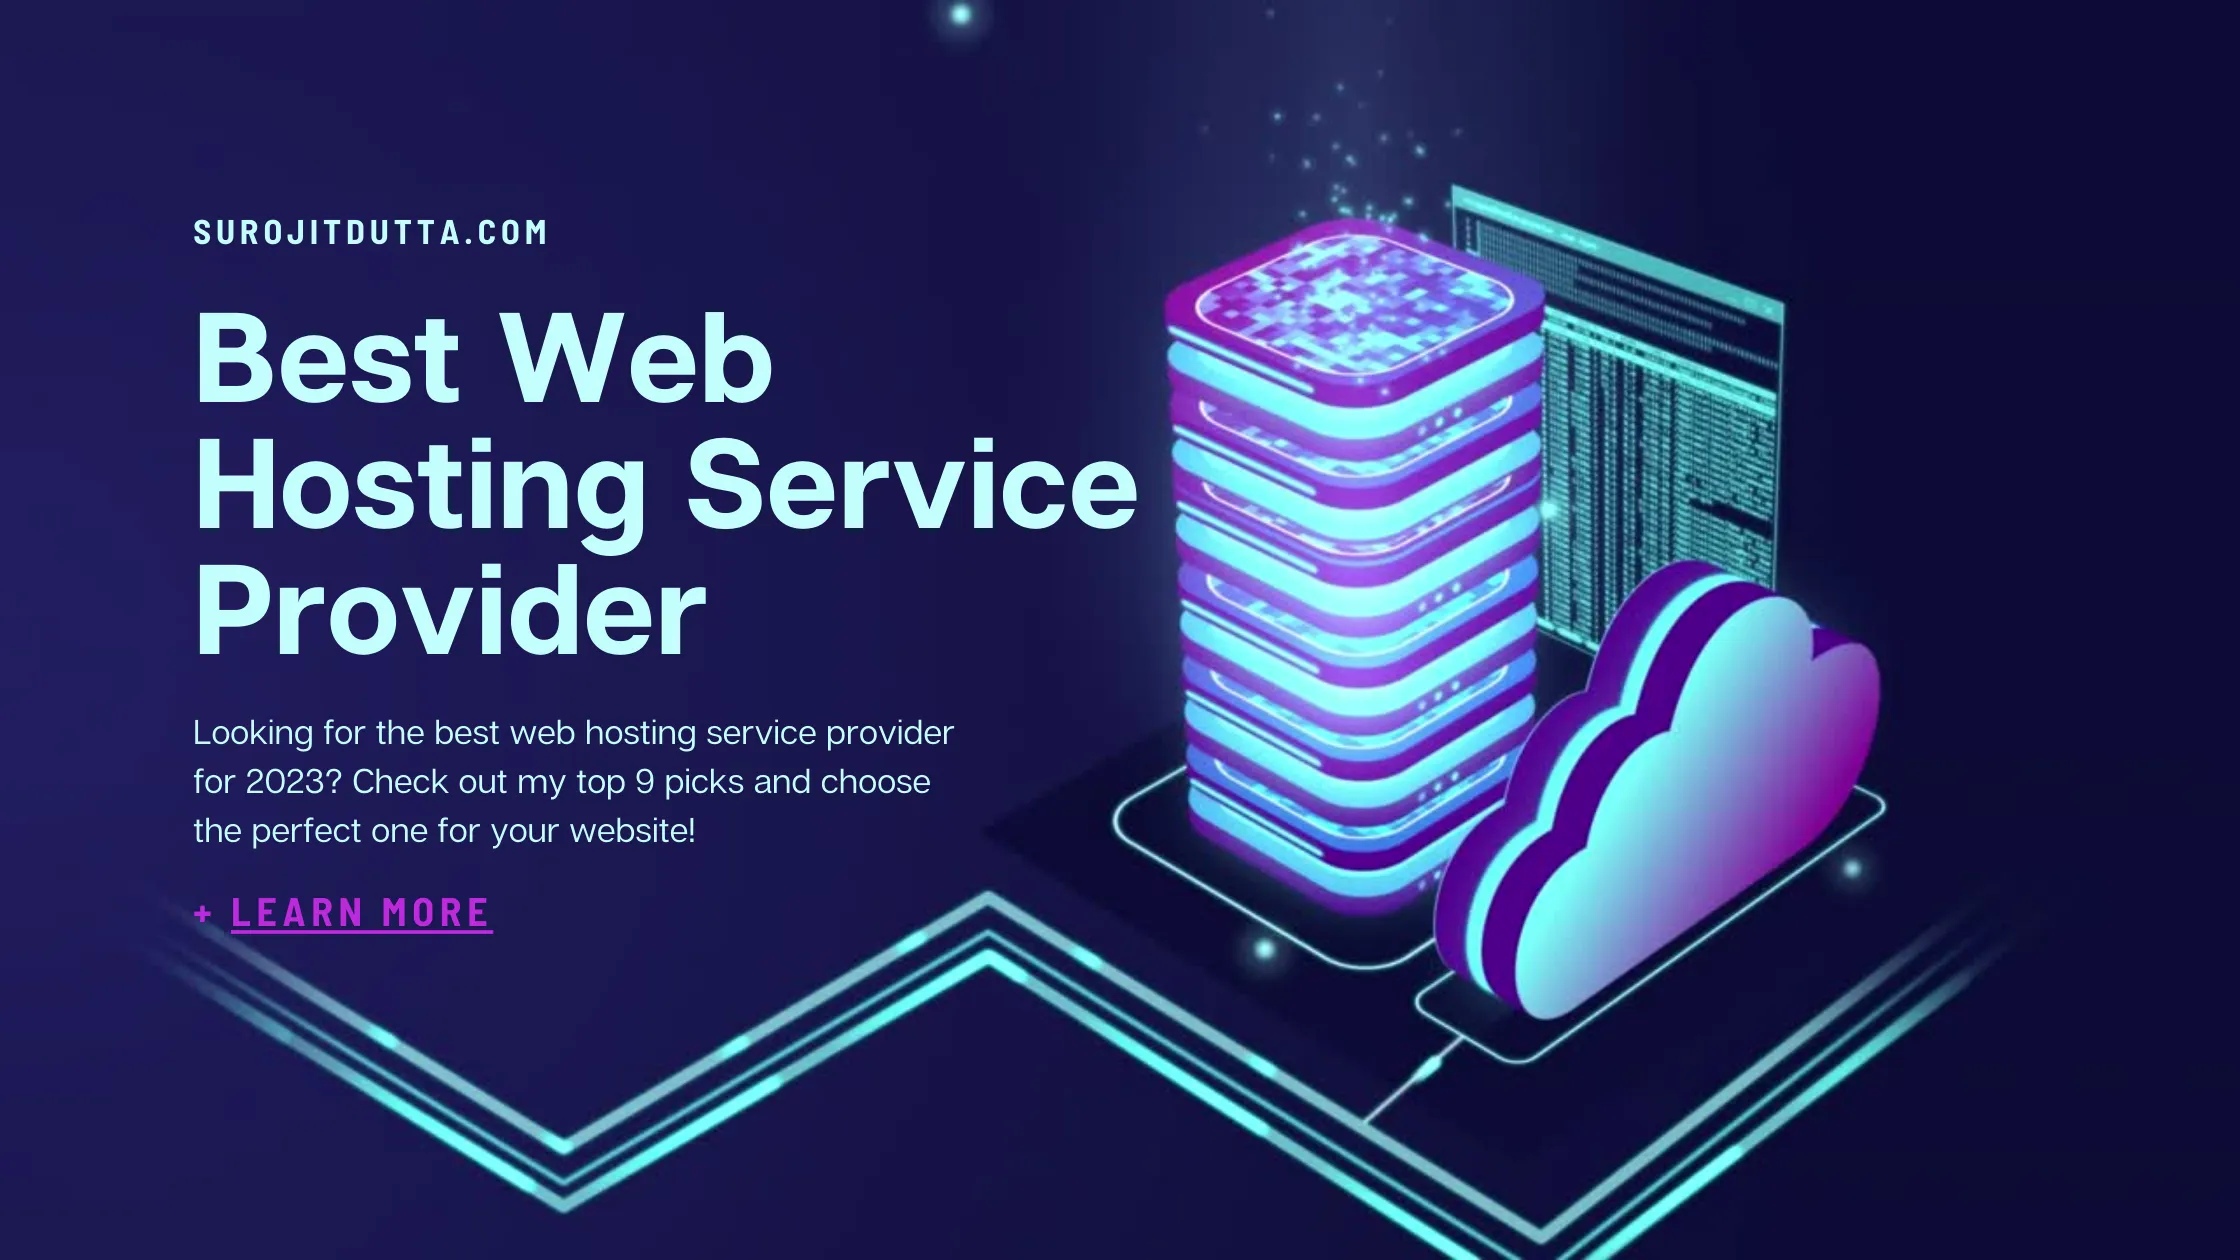 Top 9 Best Web Hosting Service Provider For 2023 1